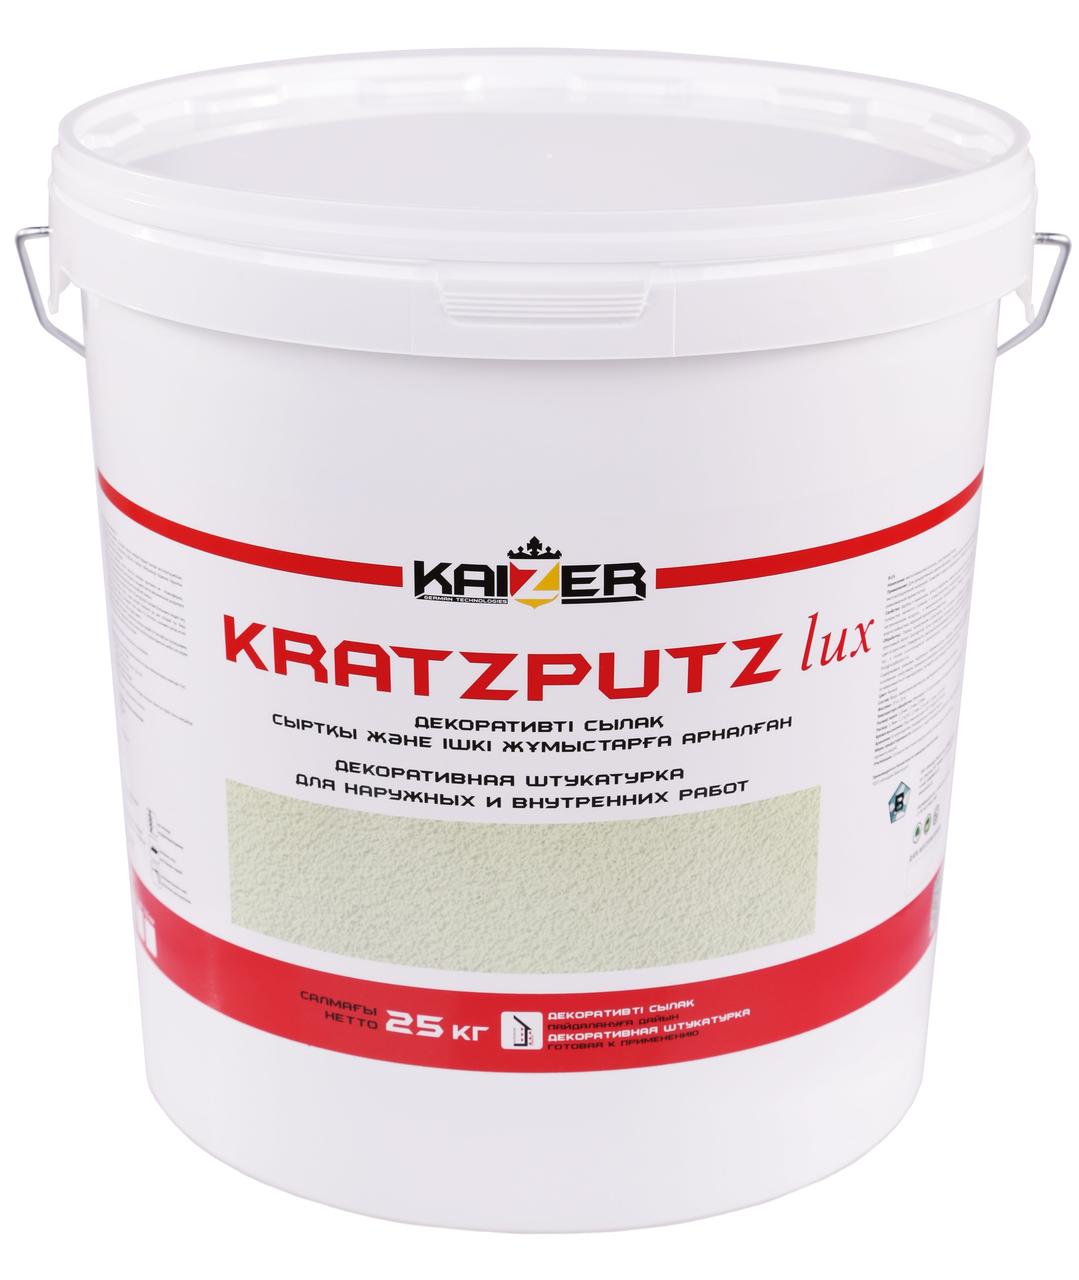 Декоративная штукатурка - Kratzputz Lux 1,5 mm 25 кг.